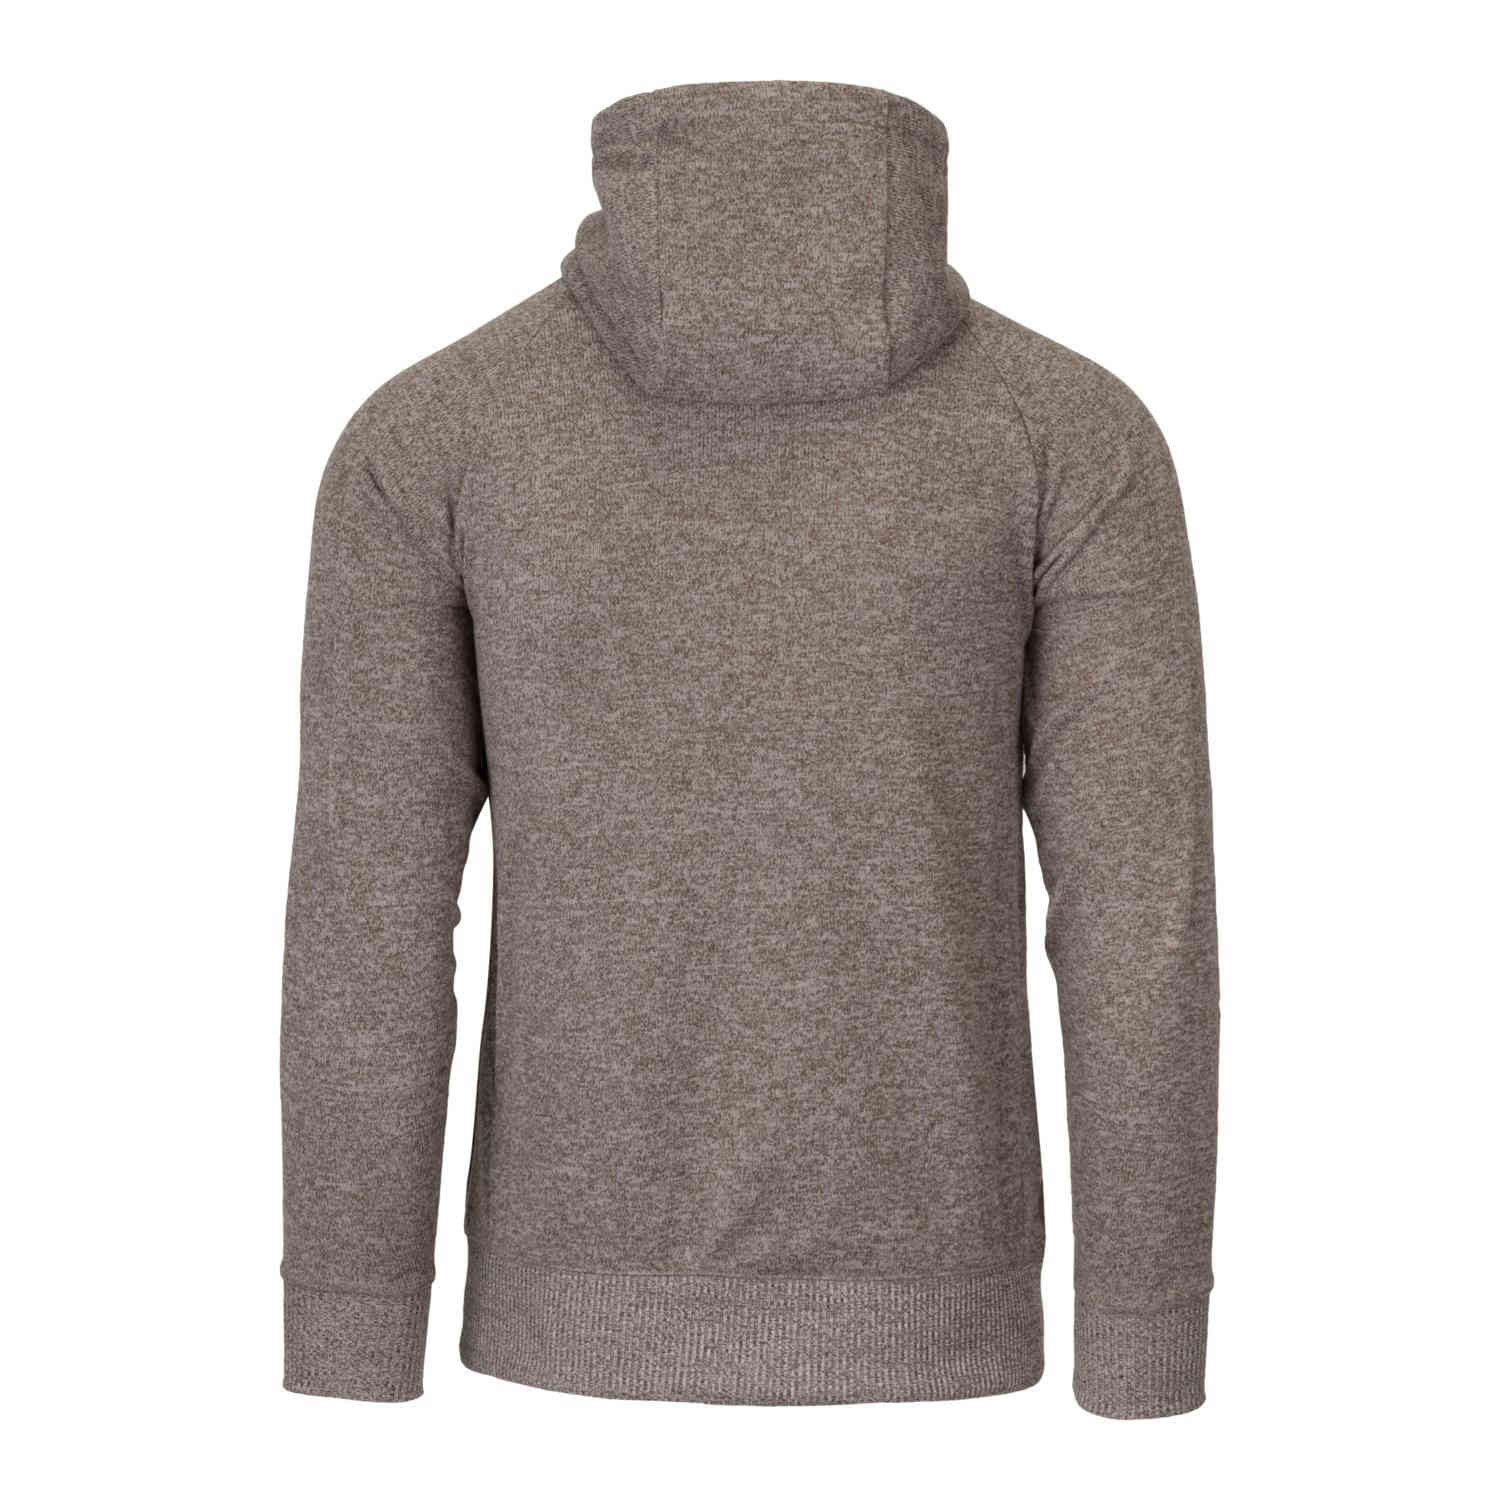 HELIKON-Tex Covert Tactical Hoodie Hooded Sweater Zipper Zip Army | eBay